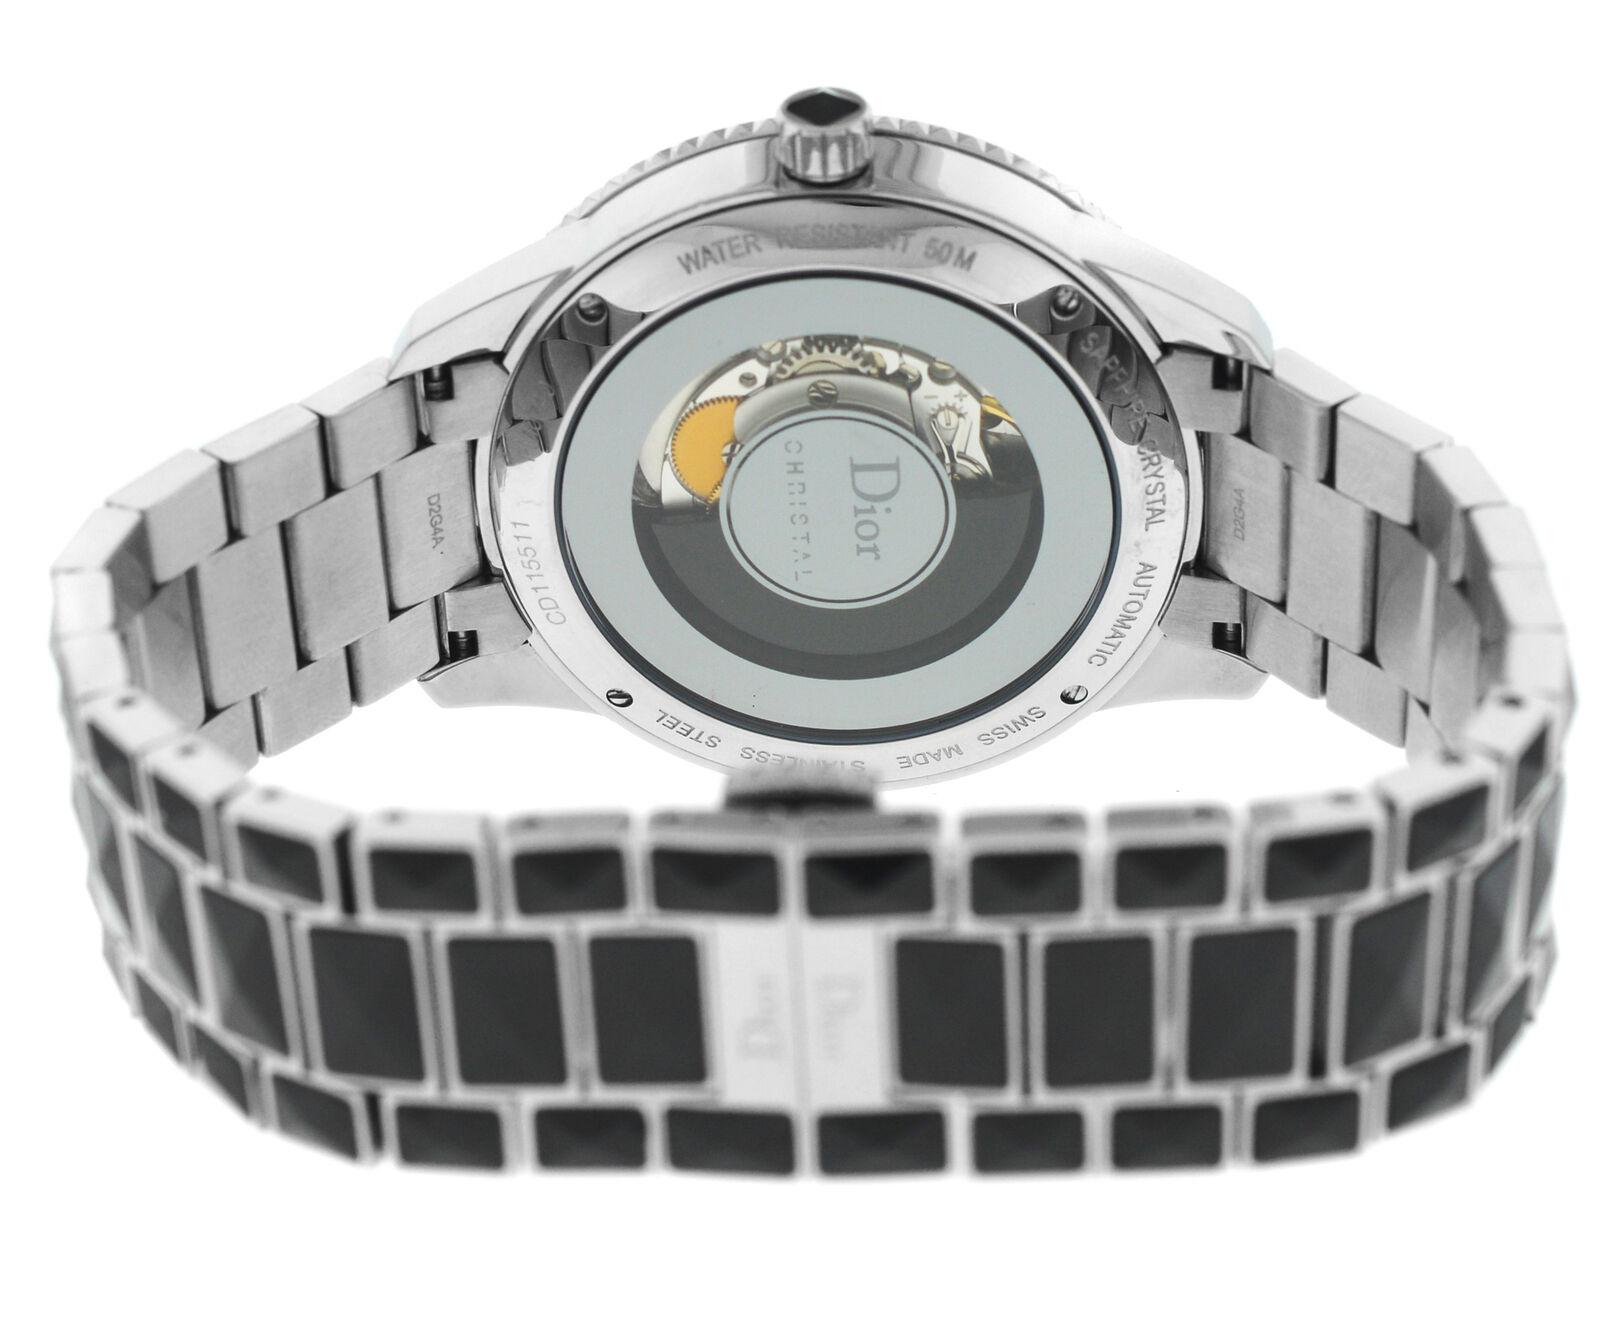 Unisex Christian Dior Christal CD115511M001 Diamond Automatic Watch 3